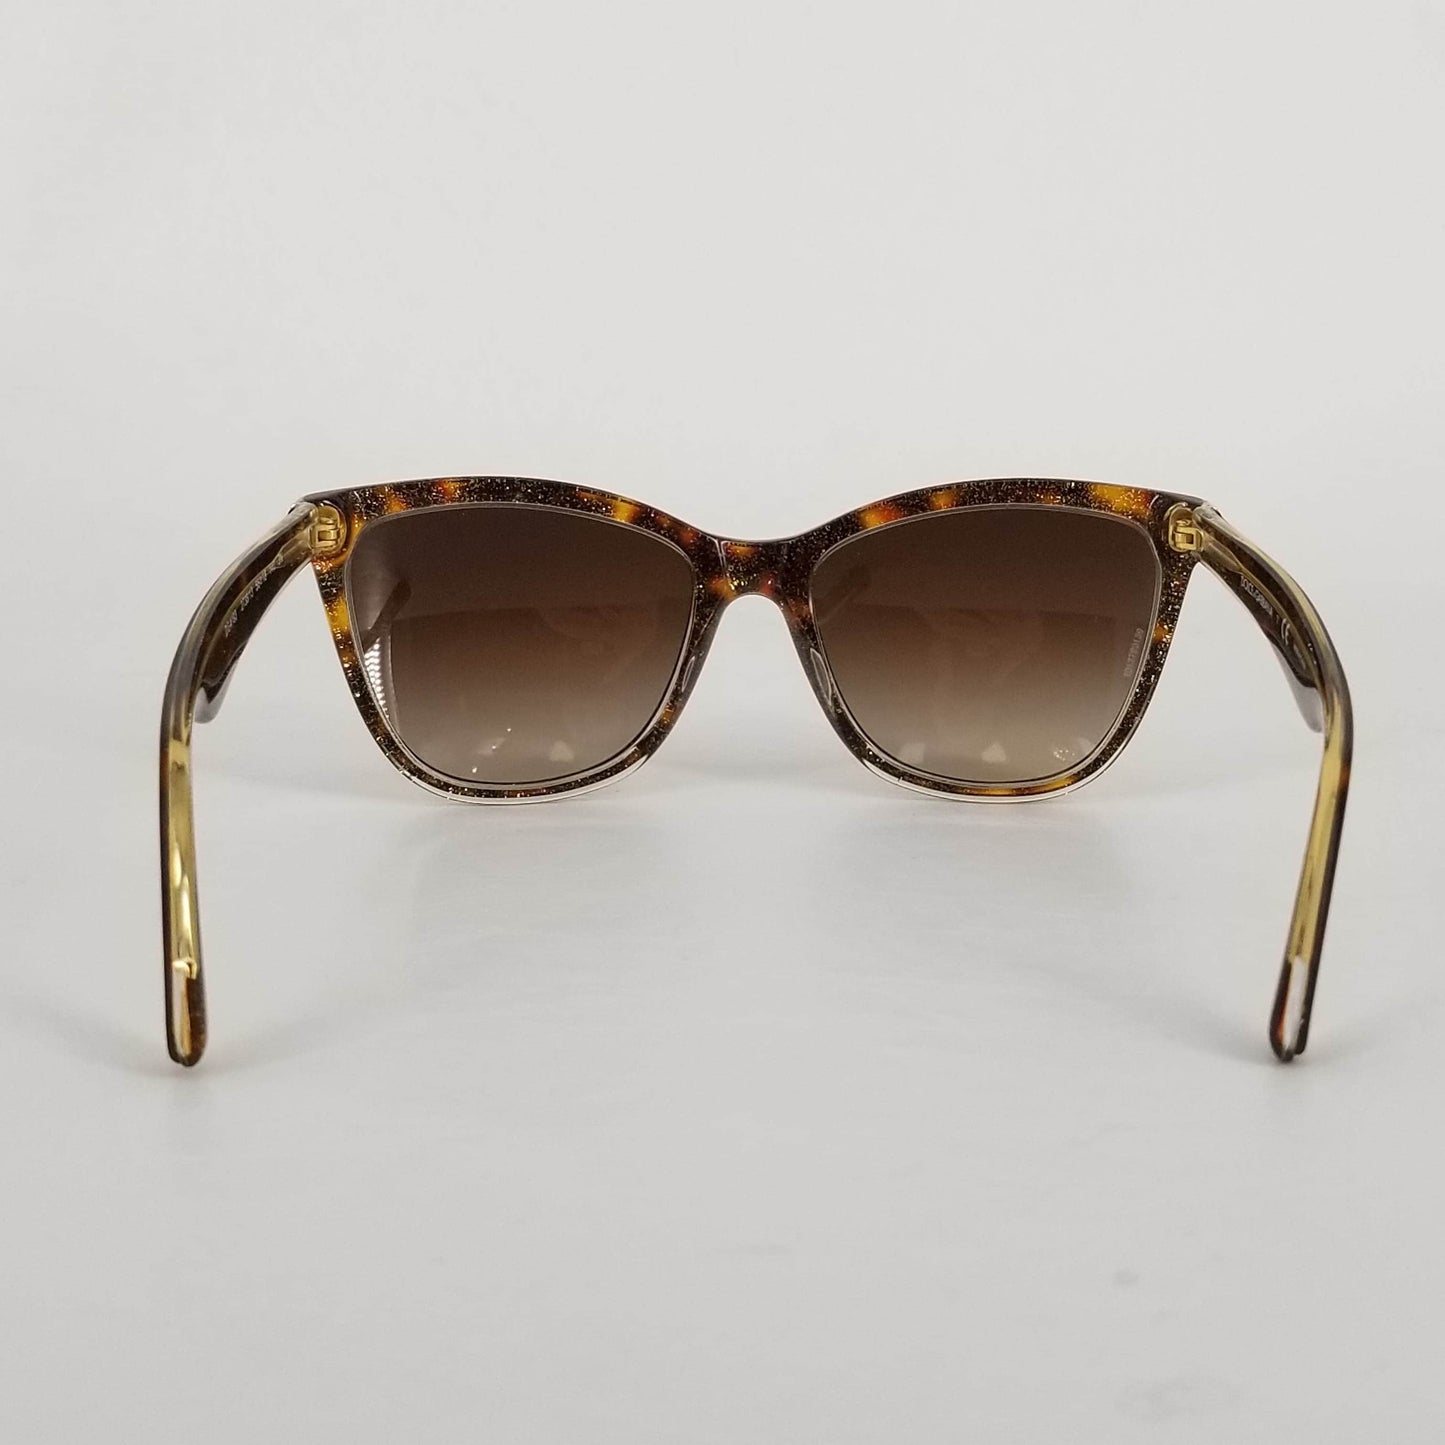 Authentic Dolce & Gabbana Tortoiseshell Cat Eye Sunglasses DG4193